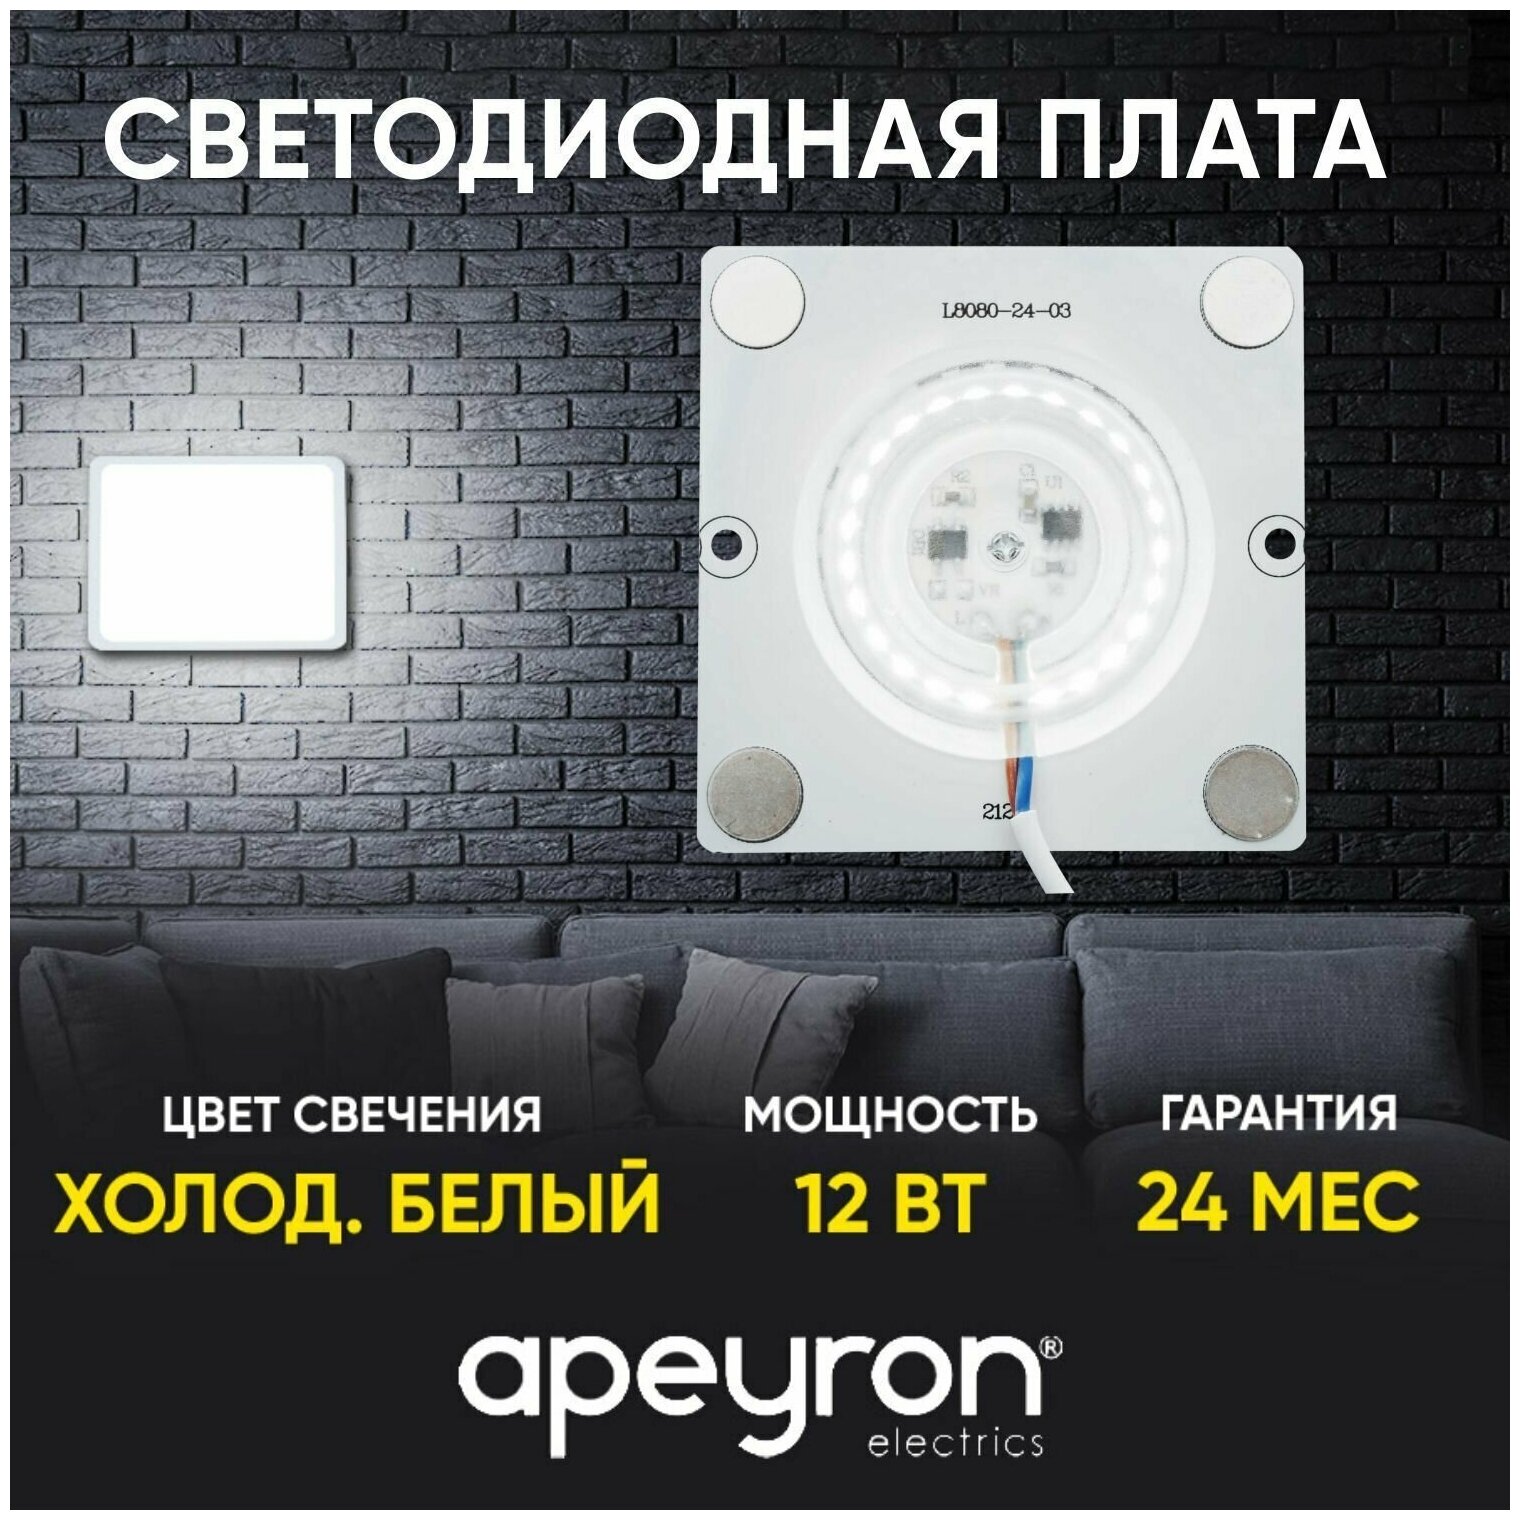 Светодиодный модуль Apeyron - фото №2